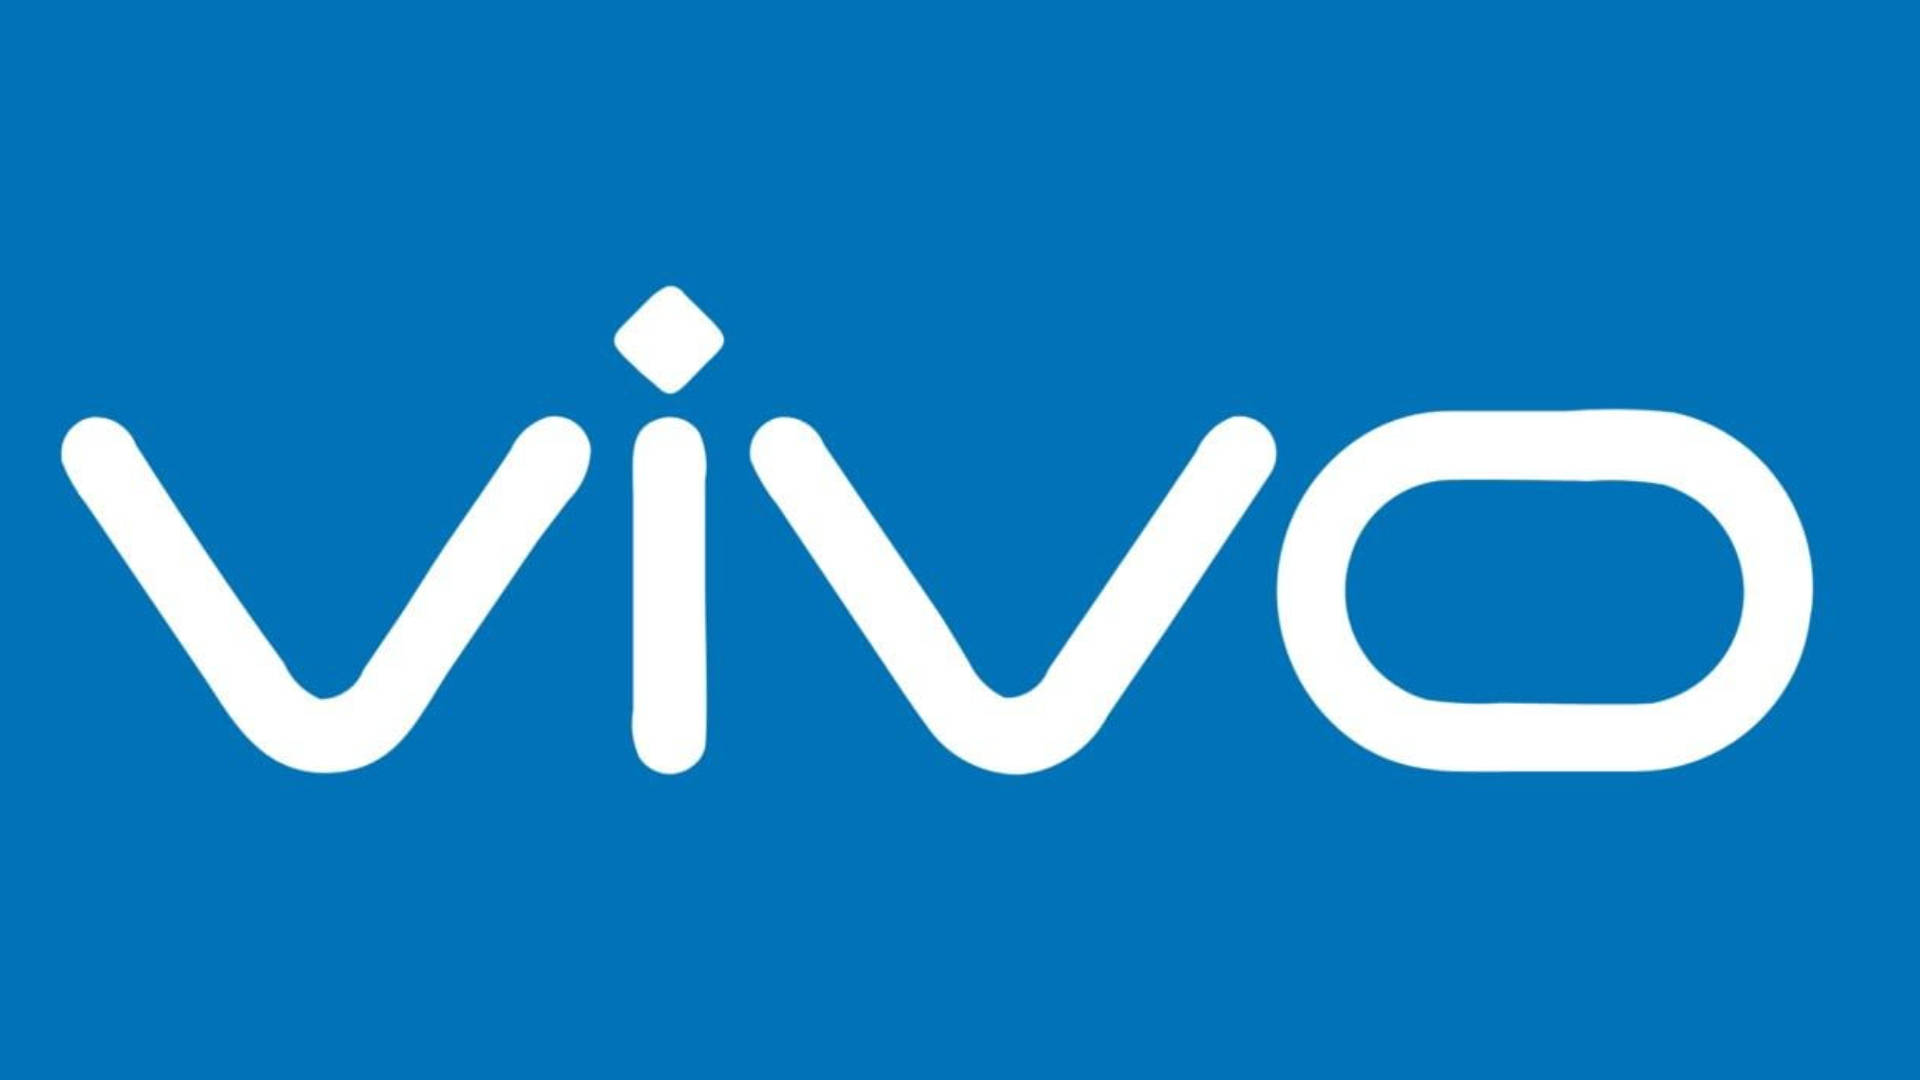 Vitvivo-logotyp Blå Wallpaper